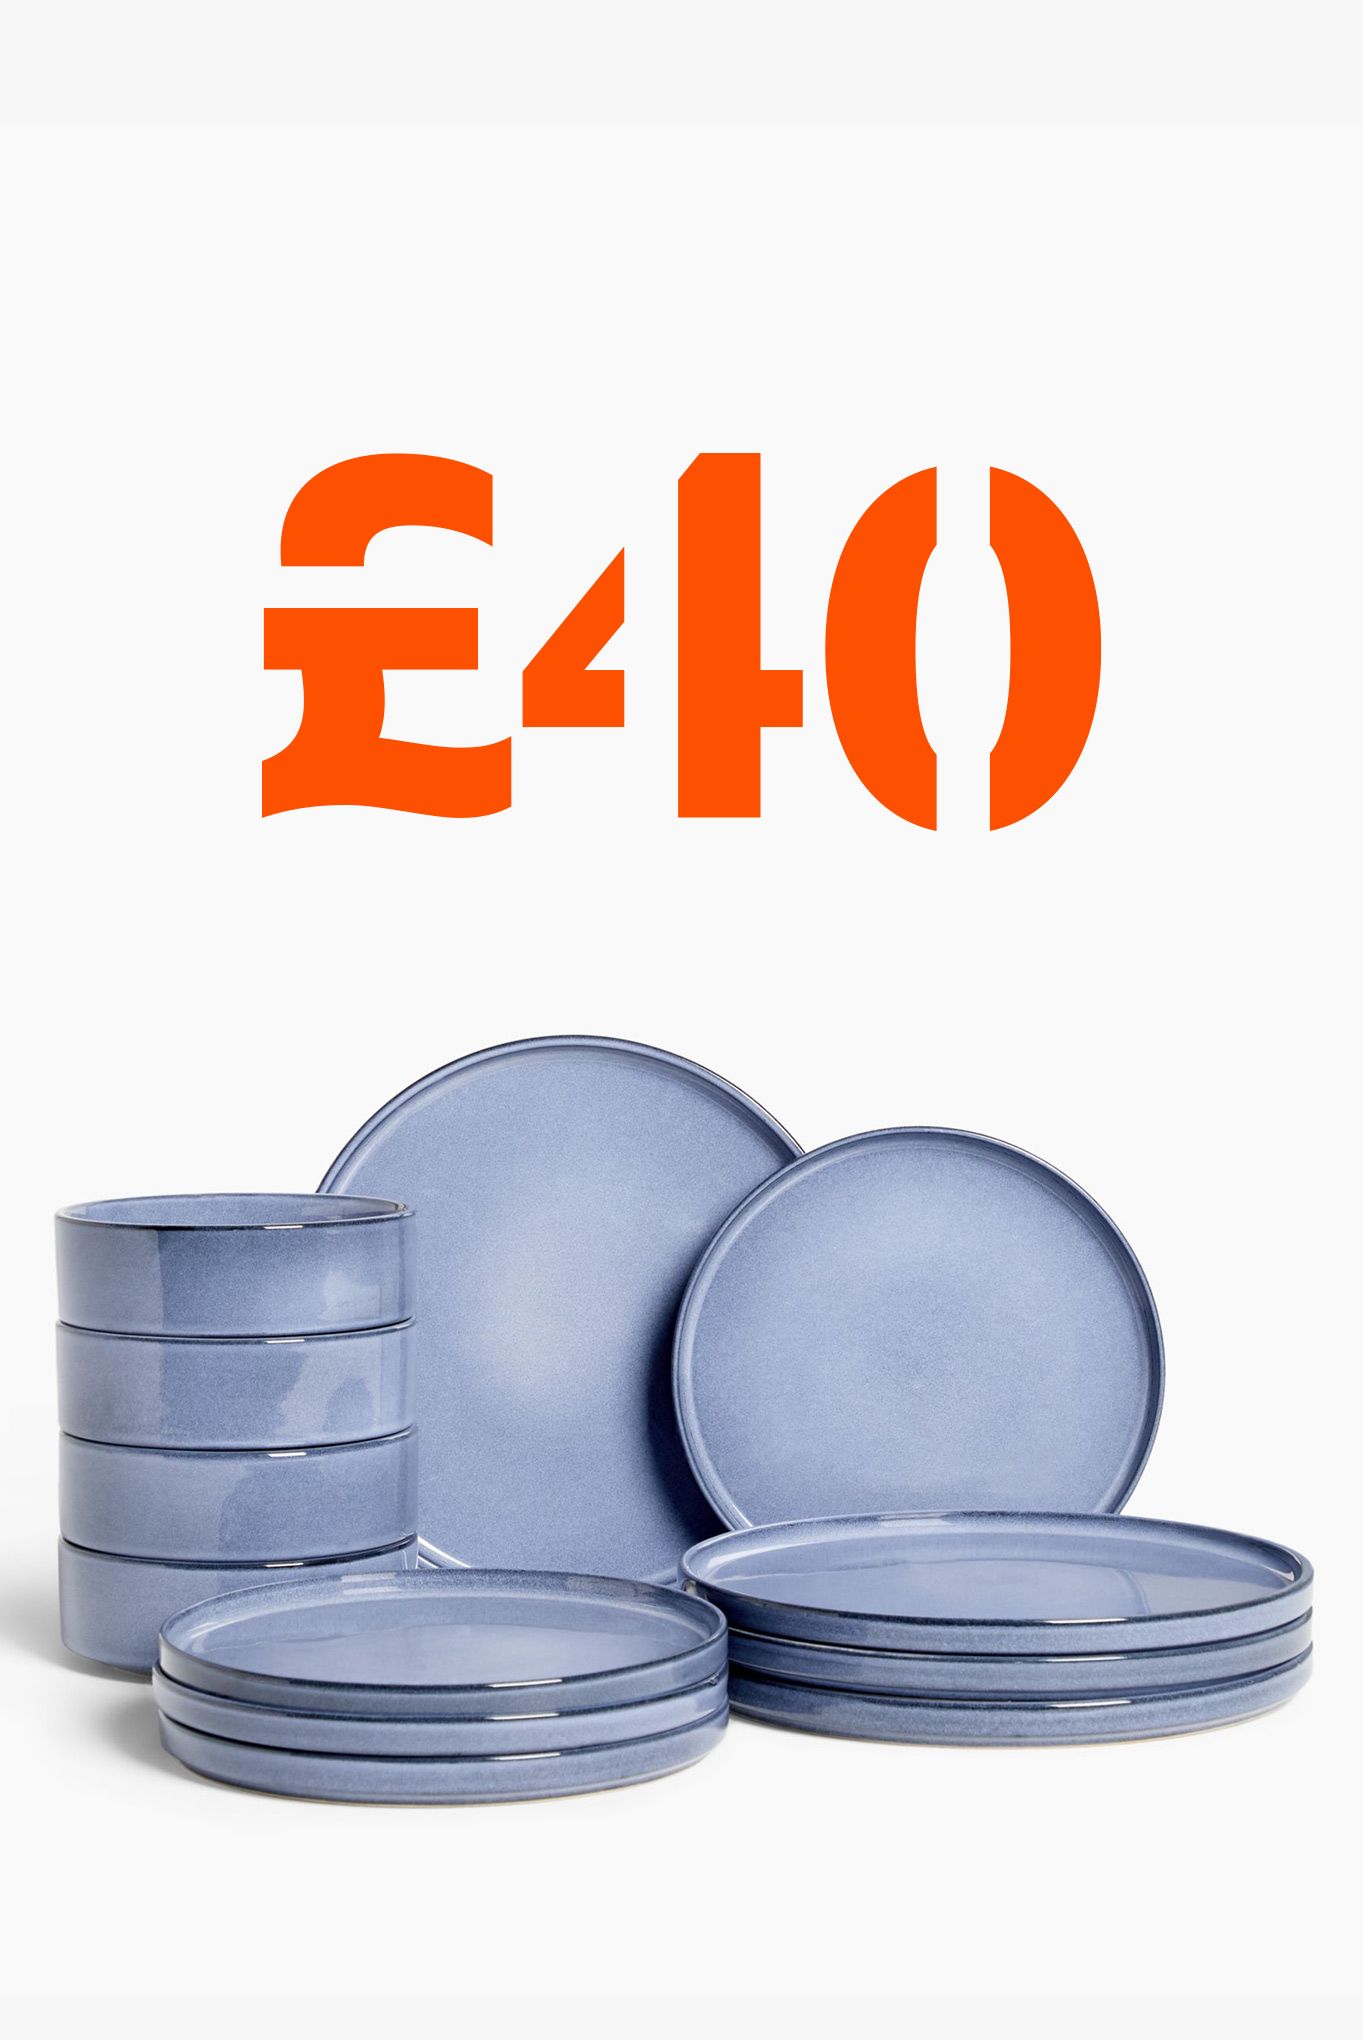 ANYDAY John Lewis & Partners Studio Reactive Glaze Dinnerware Set, 12 Piece, Blue £40.00